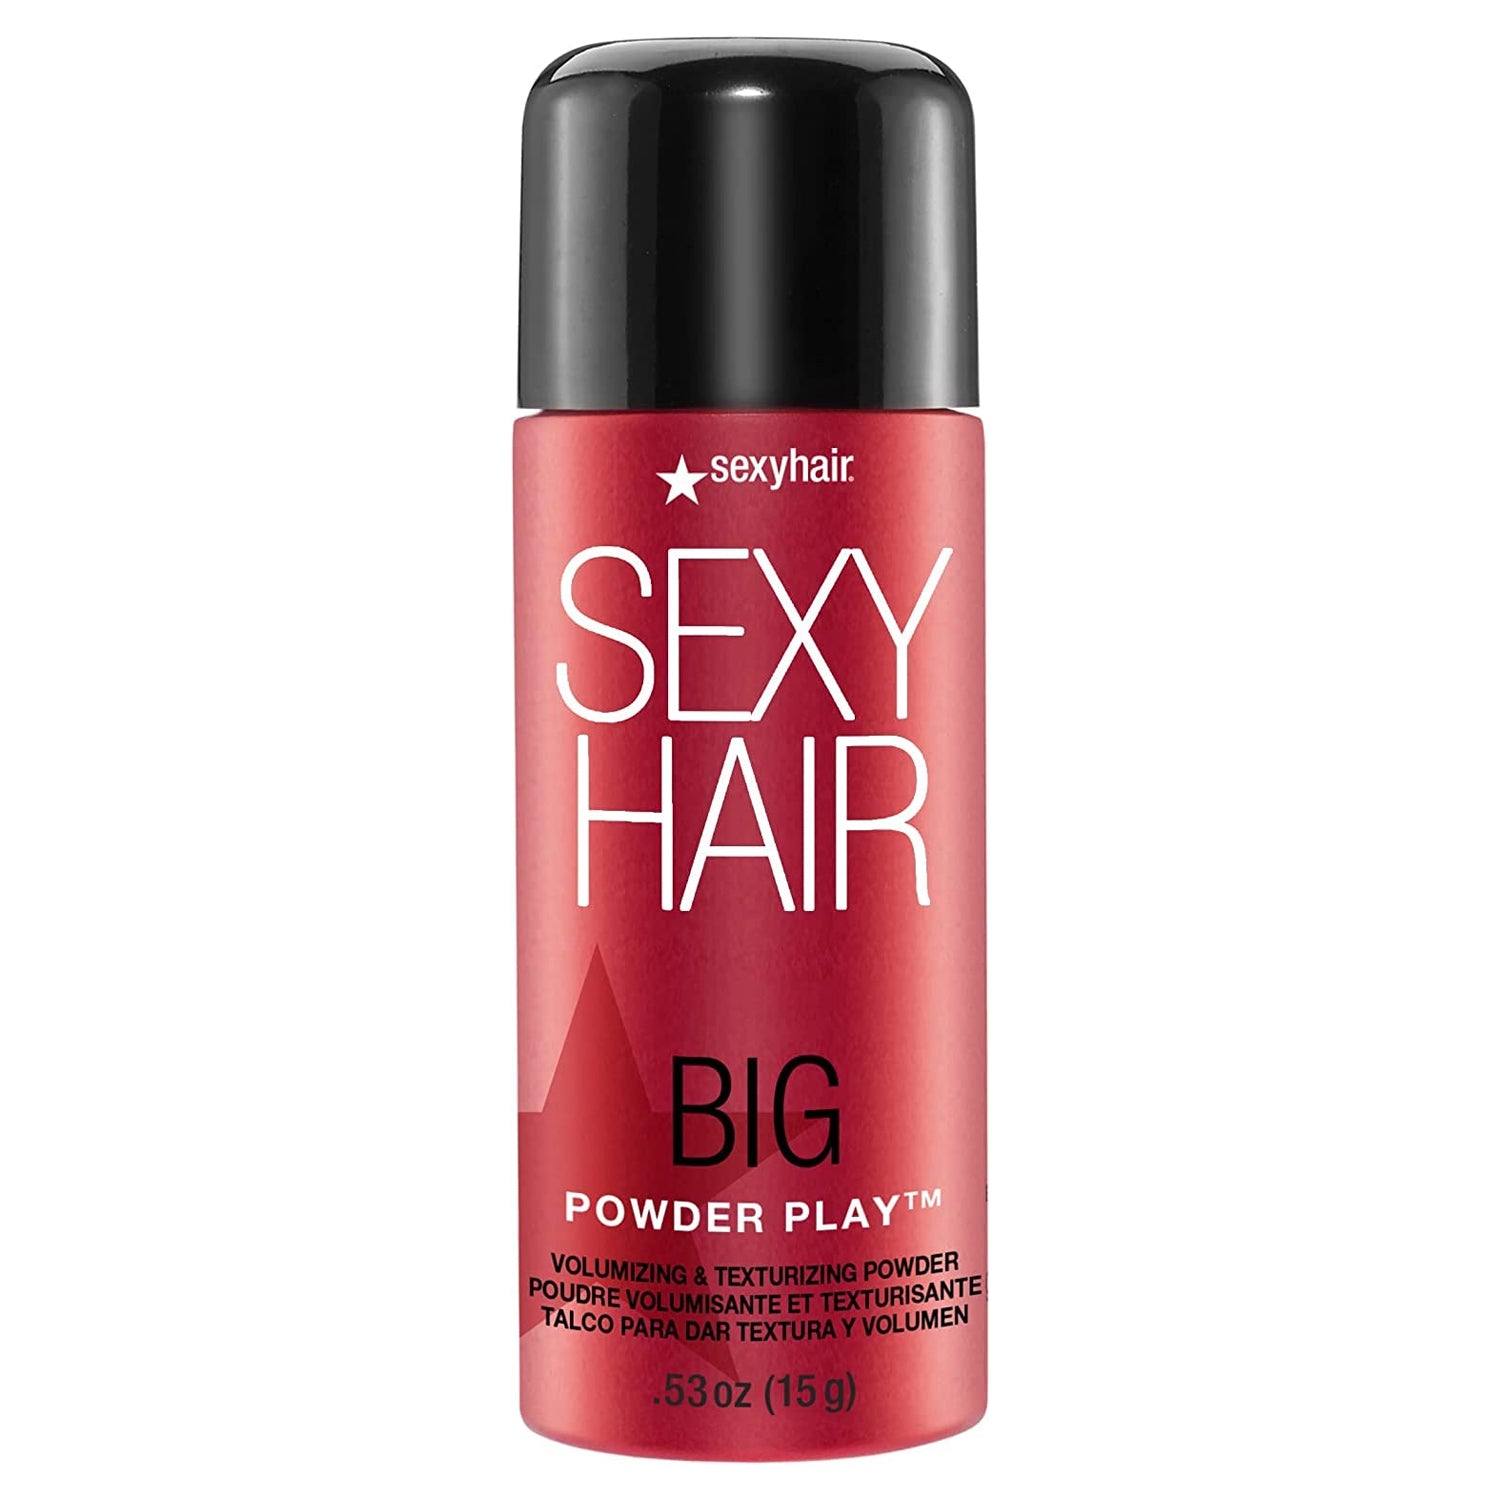 Big Sexy Hair Spray & Play Volumizing Hairspray - Sexy Hair